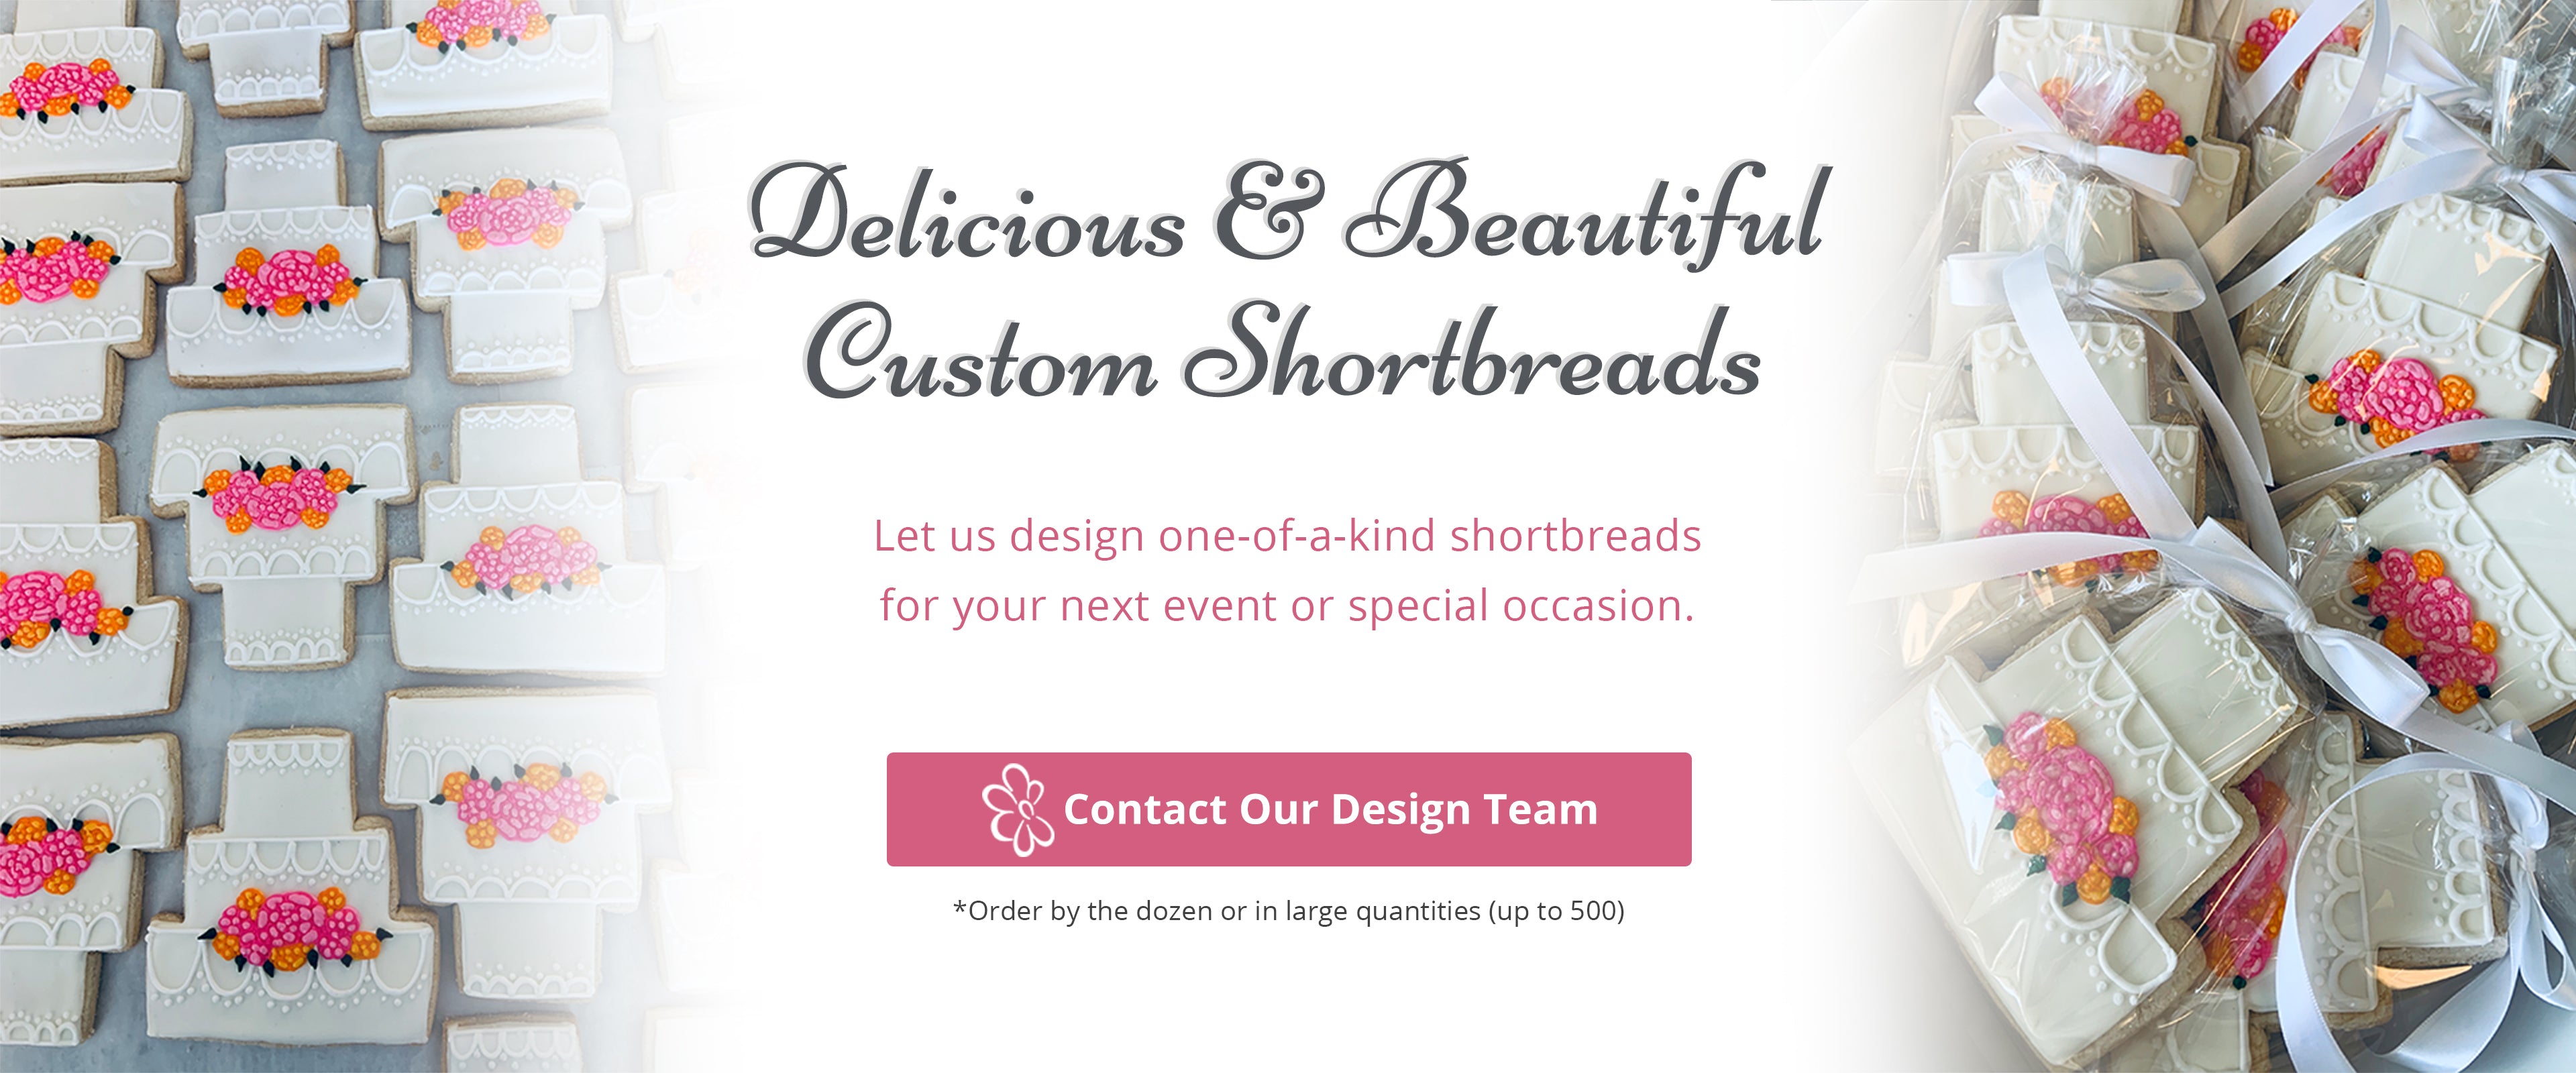 Delicious & beautiful custom shortbreads. Contact our design team.